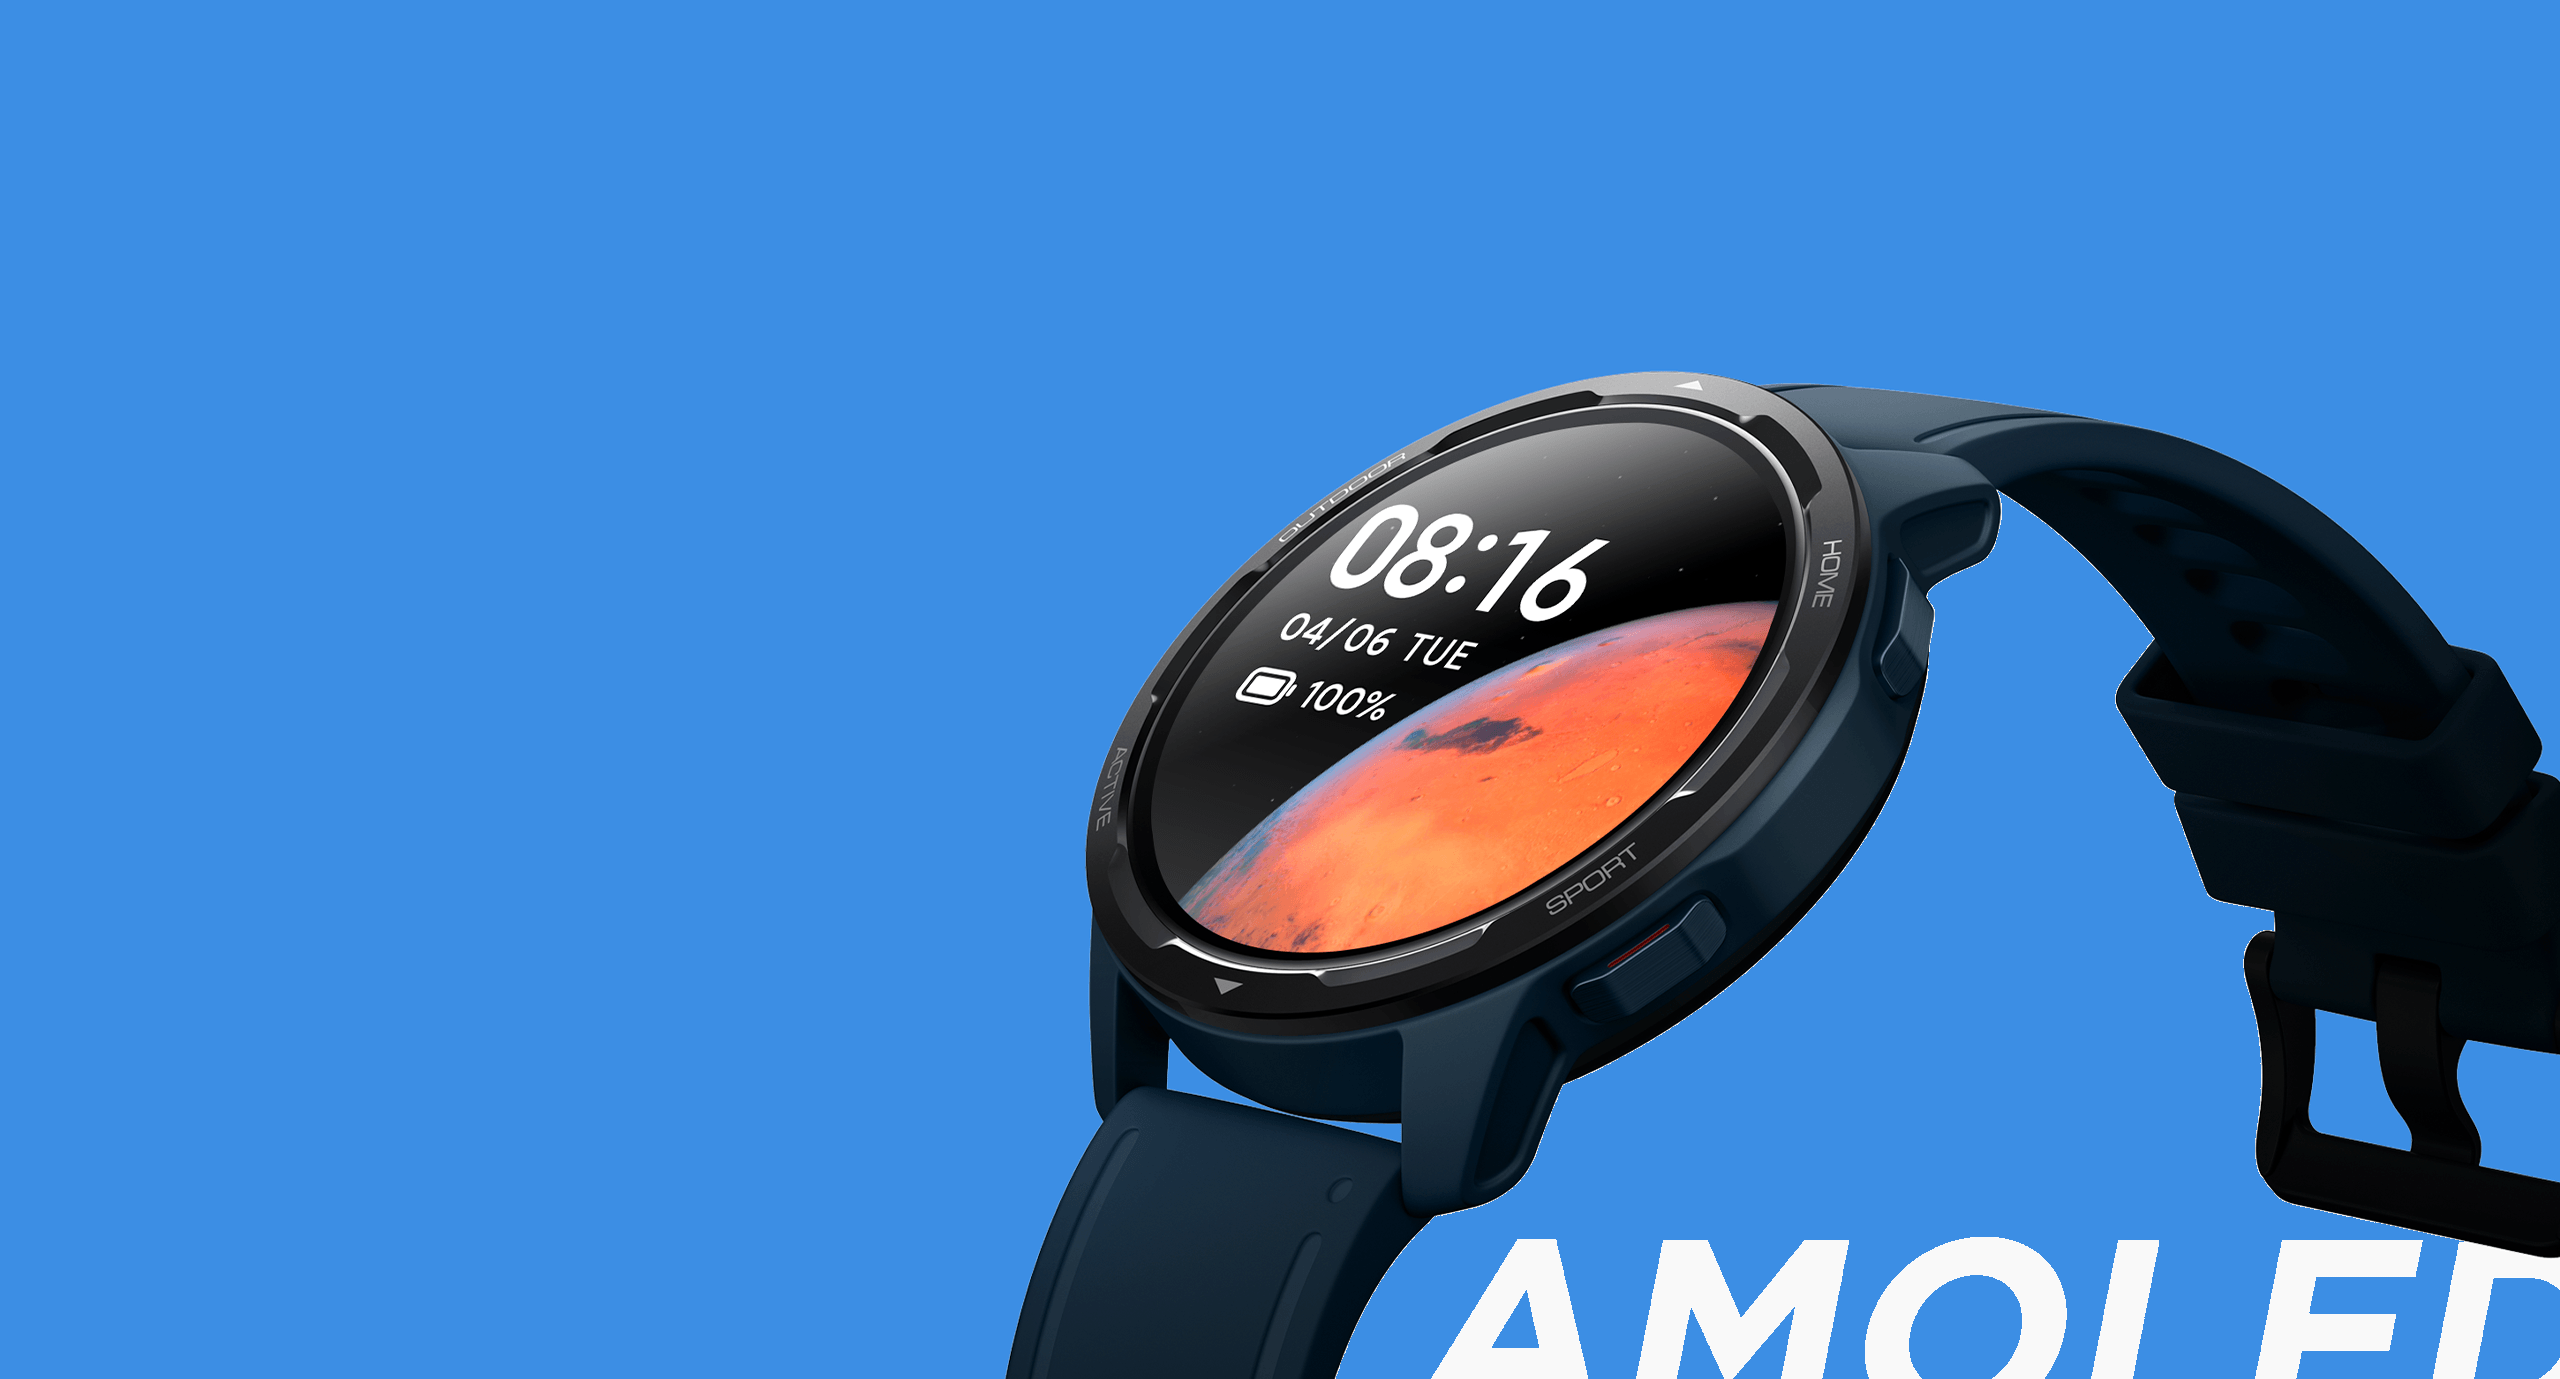 Ceas Smartwatch Xiaomi Watch S1 Active GL, Space Black